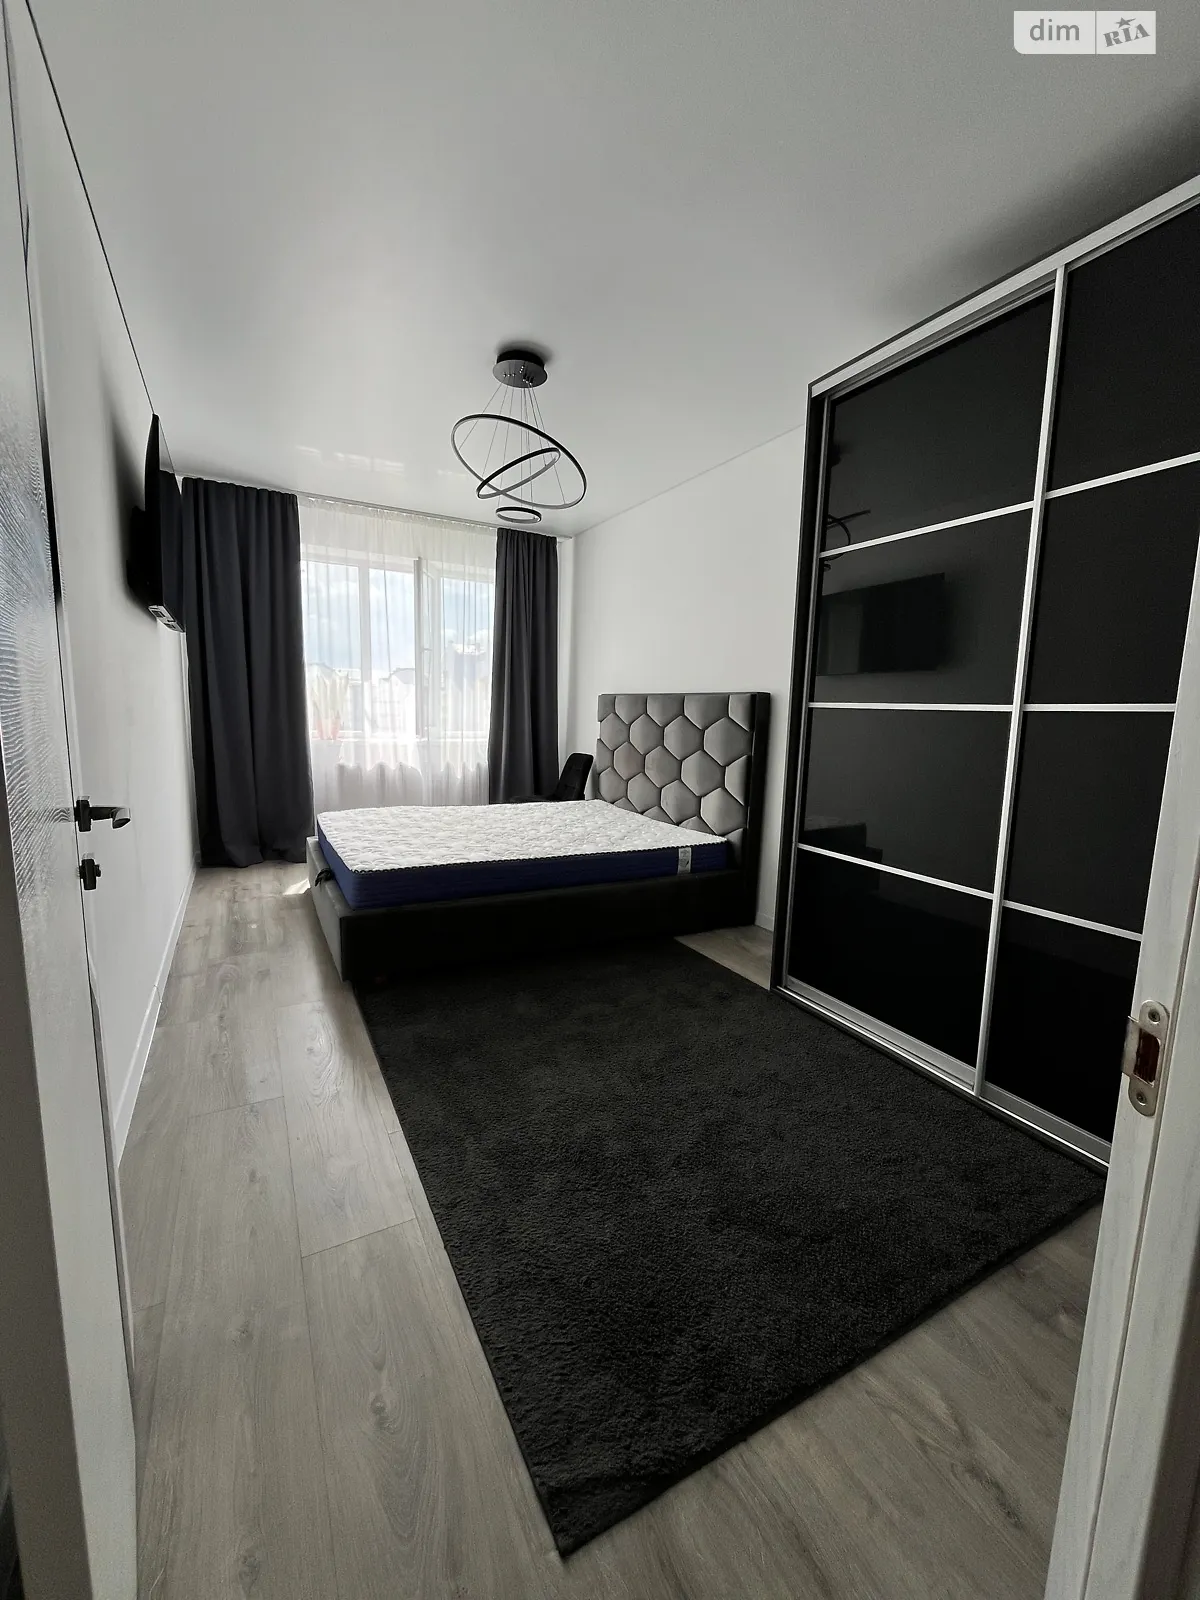 Продается 2-комнатная квартира 65.1 кв. м в Ивано-Франковске - фото 1